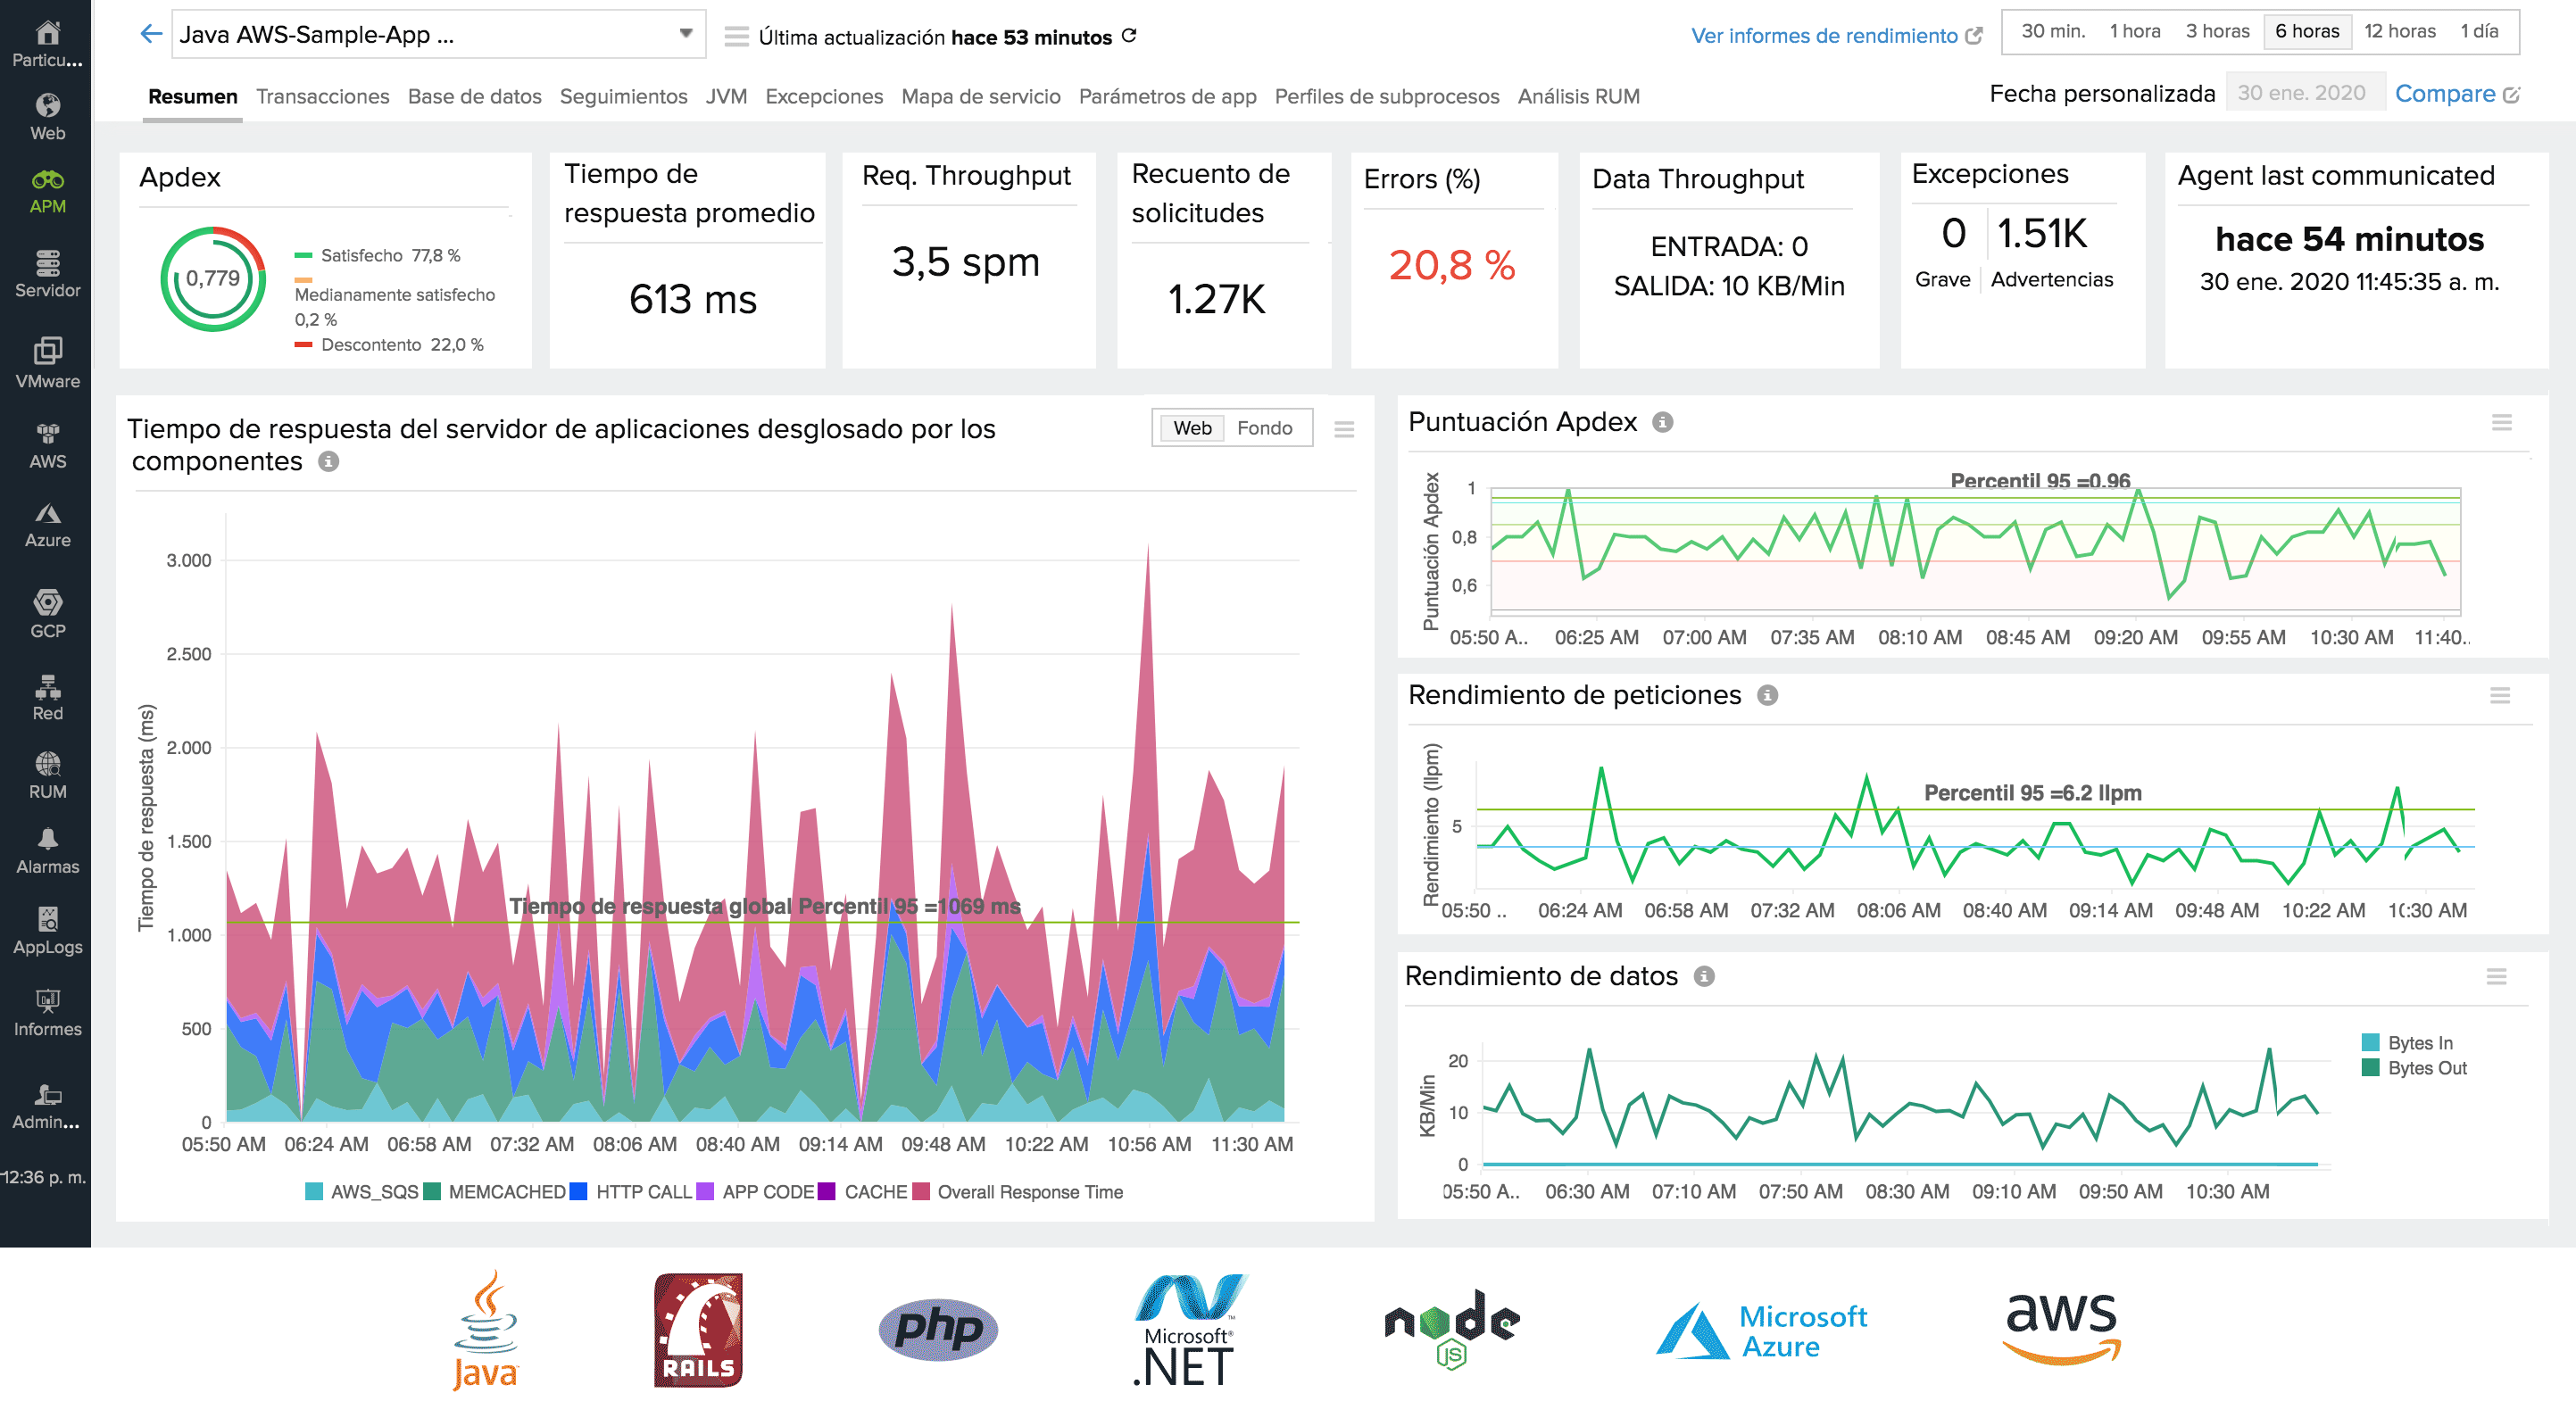 Application Performance Monitoring